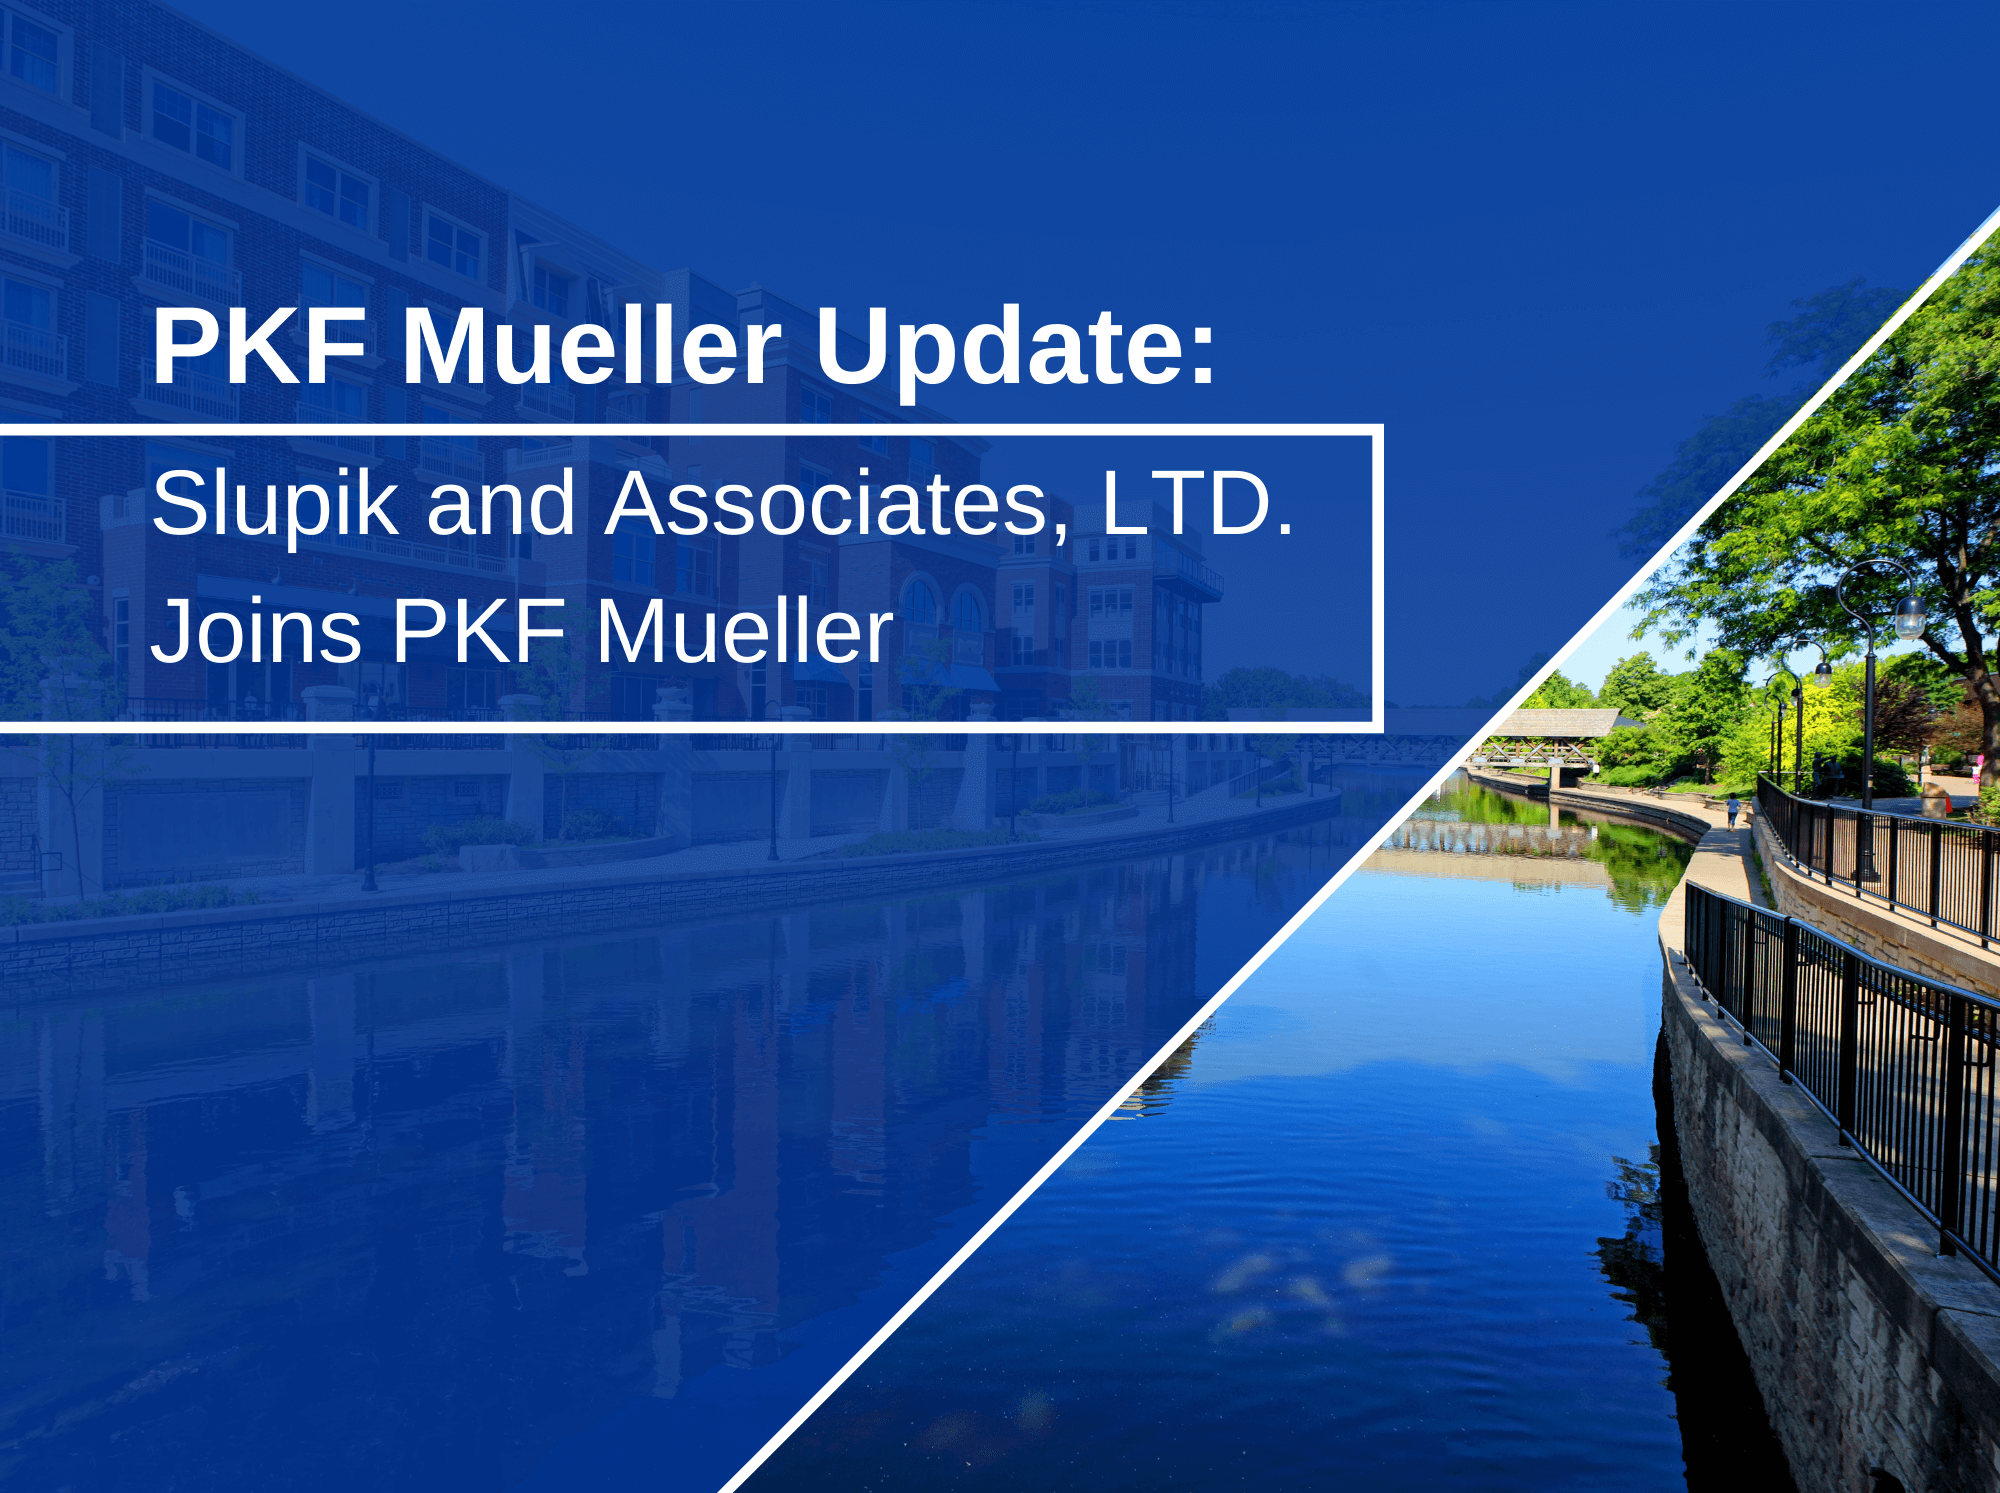 Slupik & Associates joins PKF Mueller